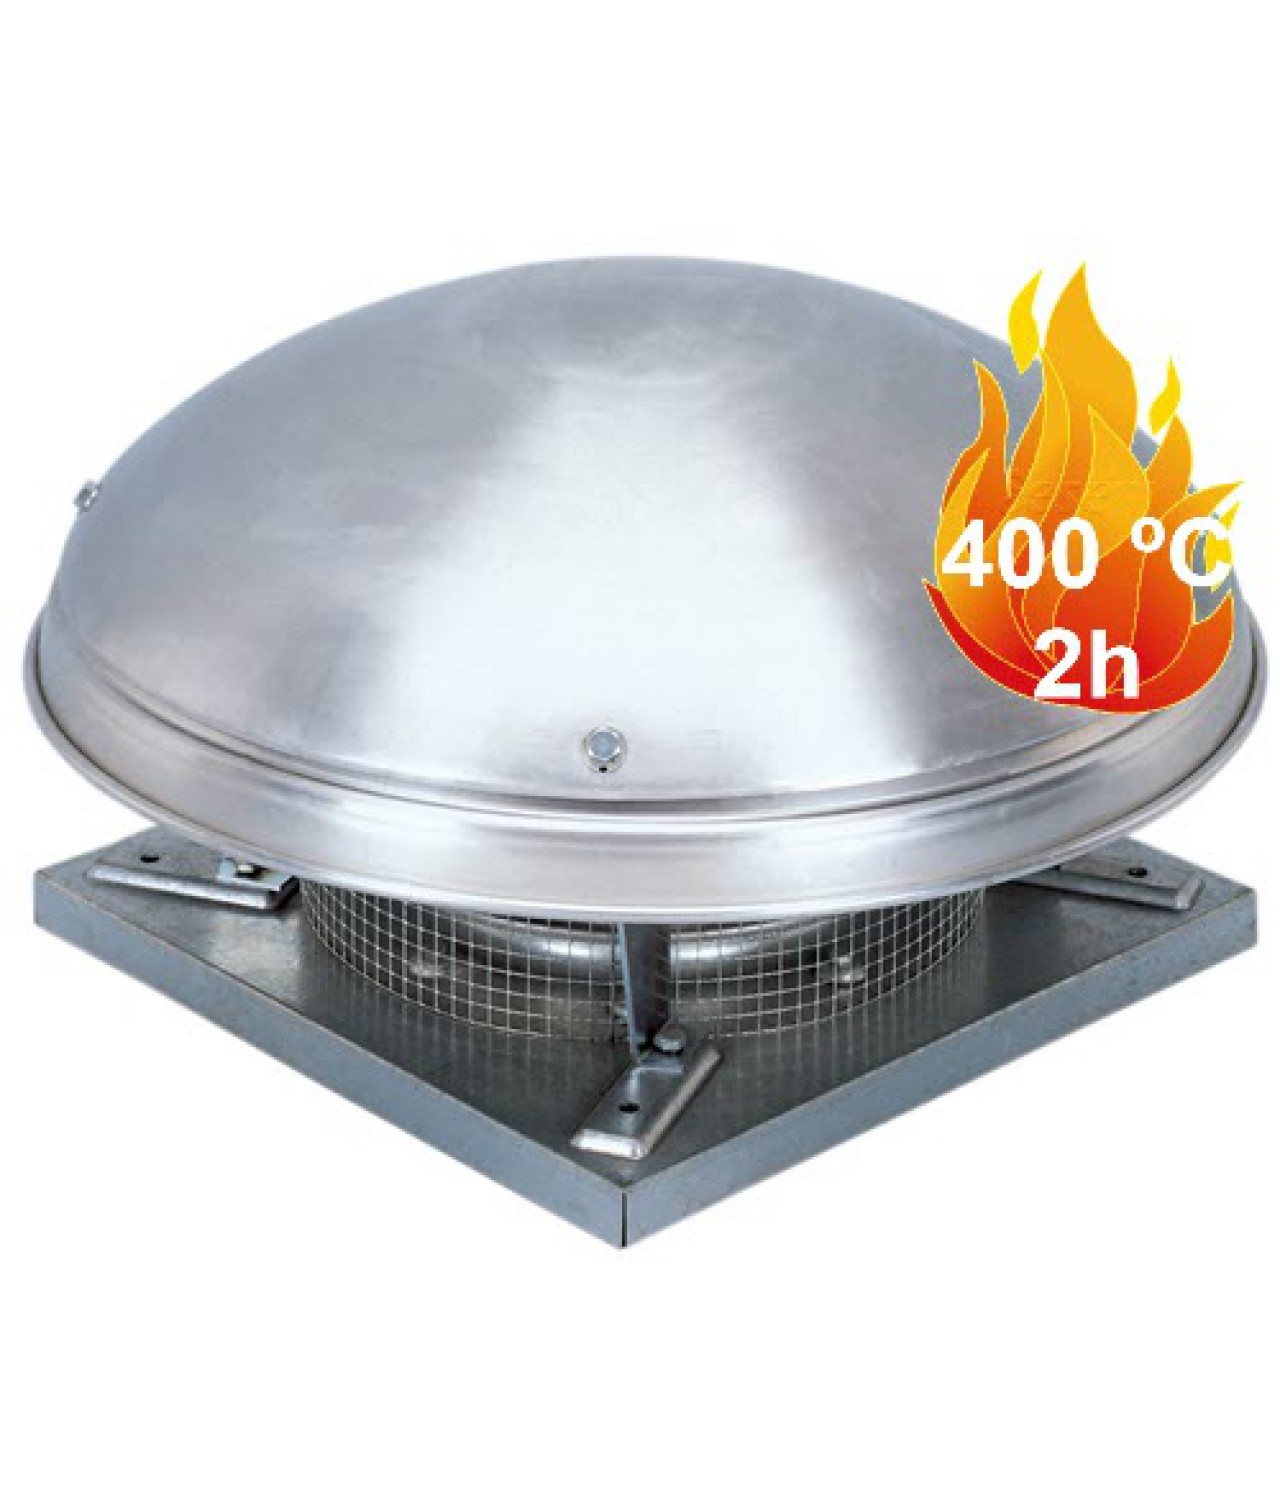 Dūmų ventiliatoriai - dūmsiurbės DV-CTH  ≤7120 m³/h